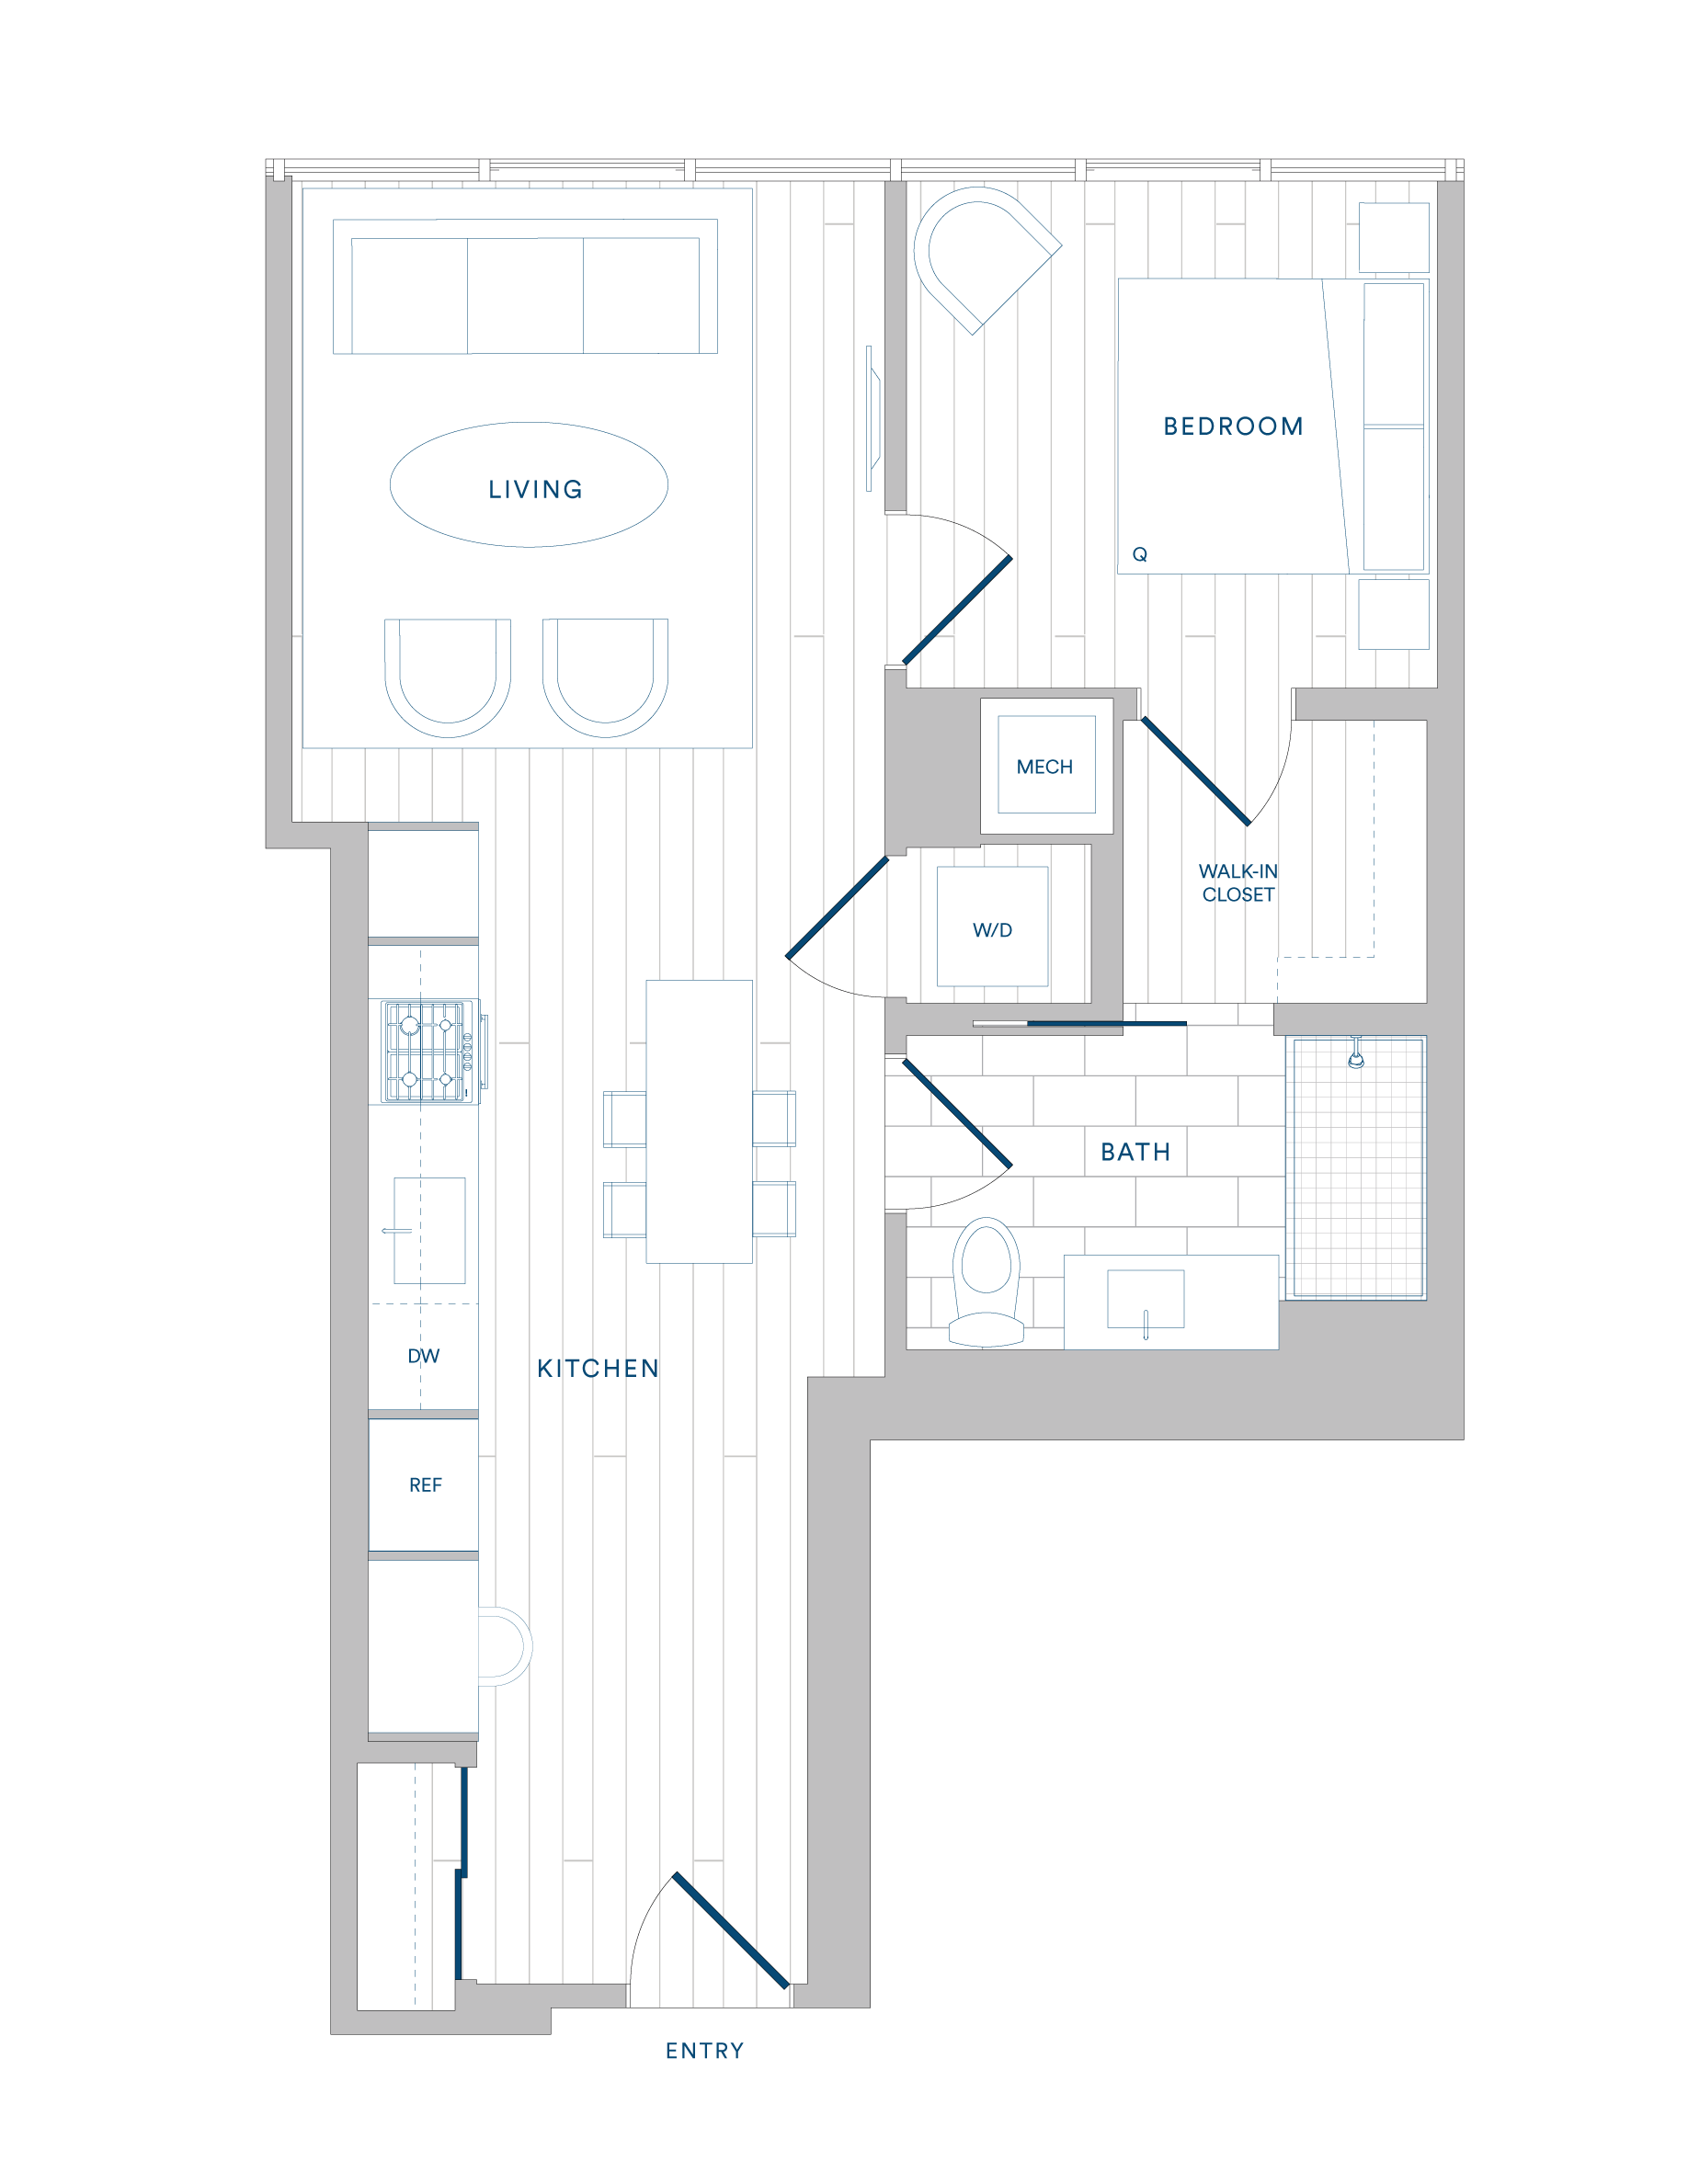 Floorplan for Apartment #517, 1 bedroom unit at Margarite